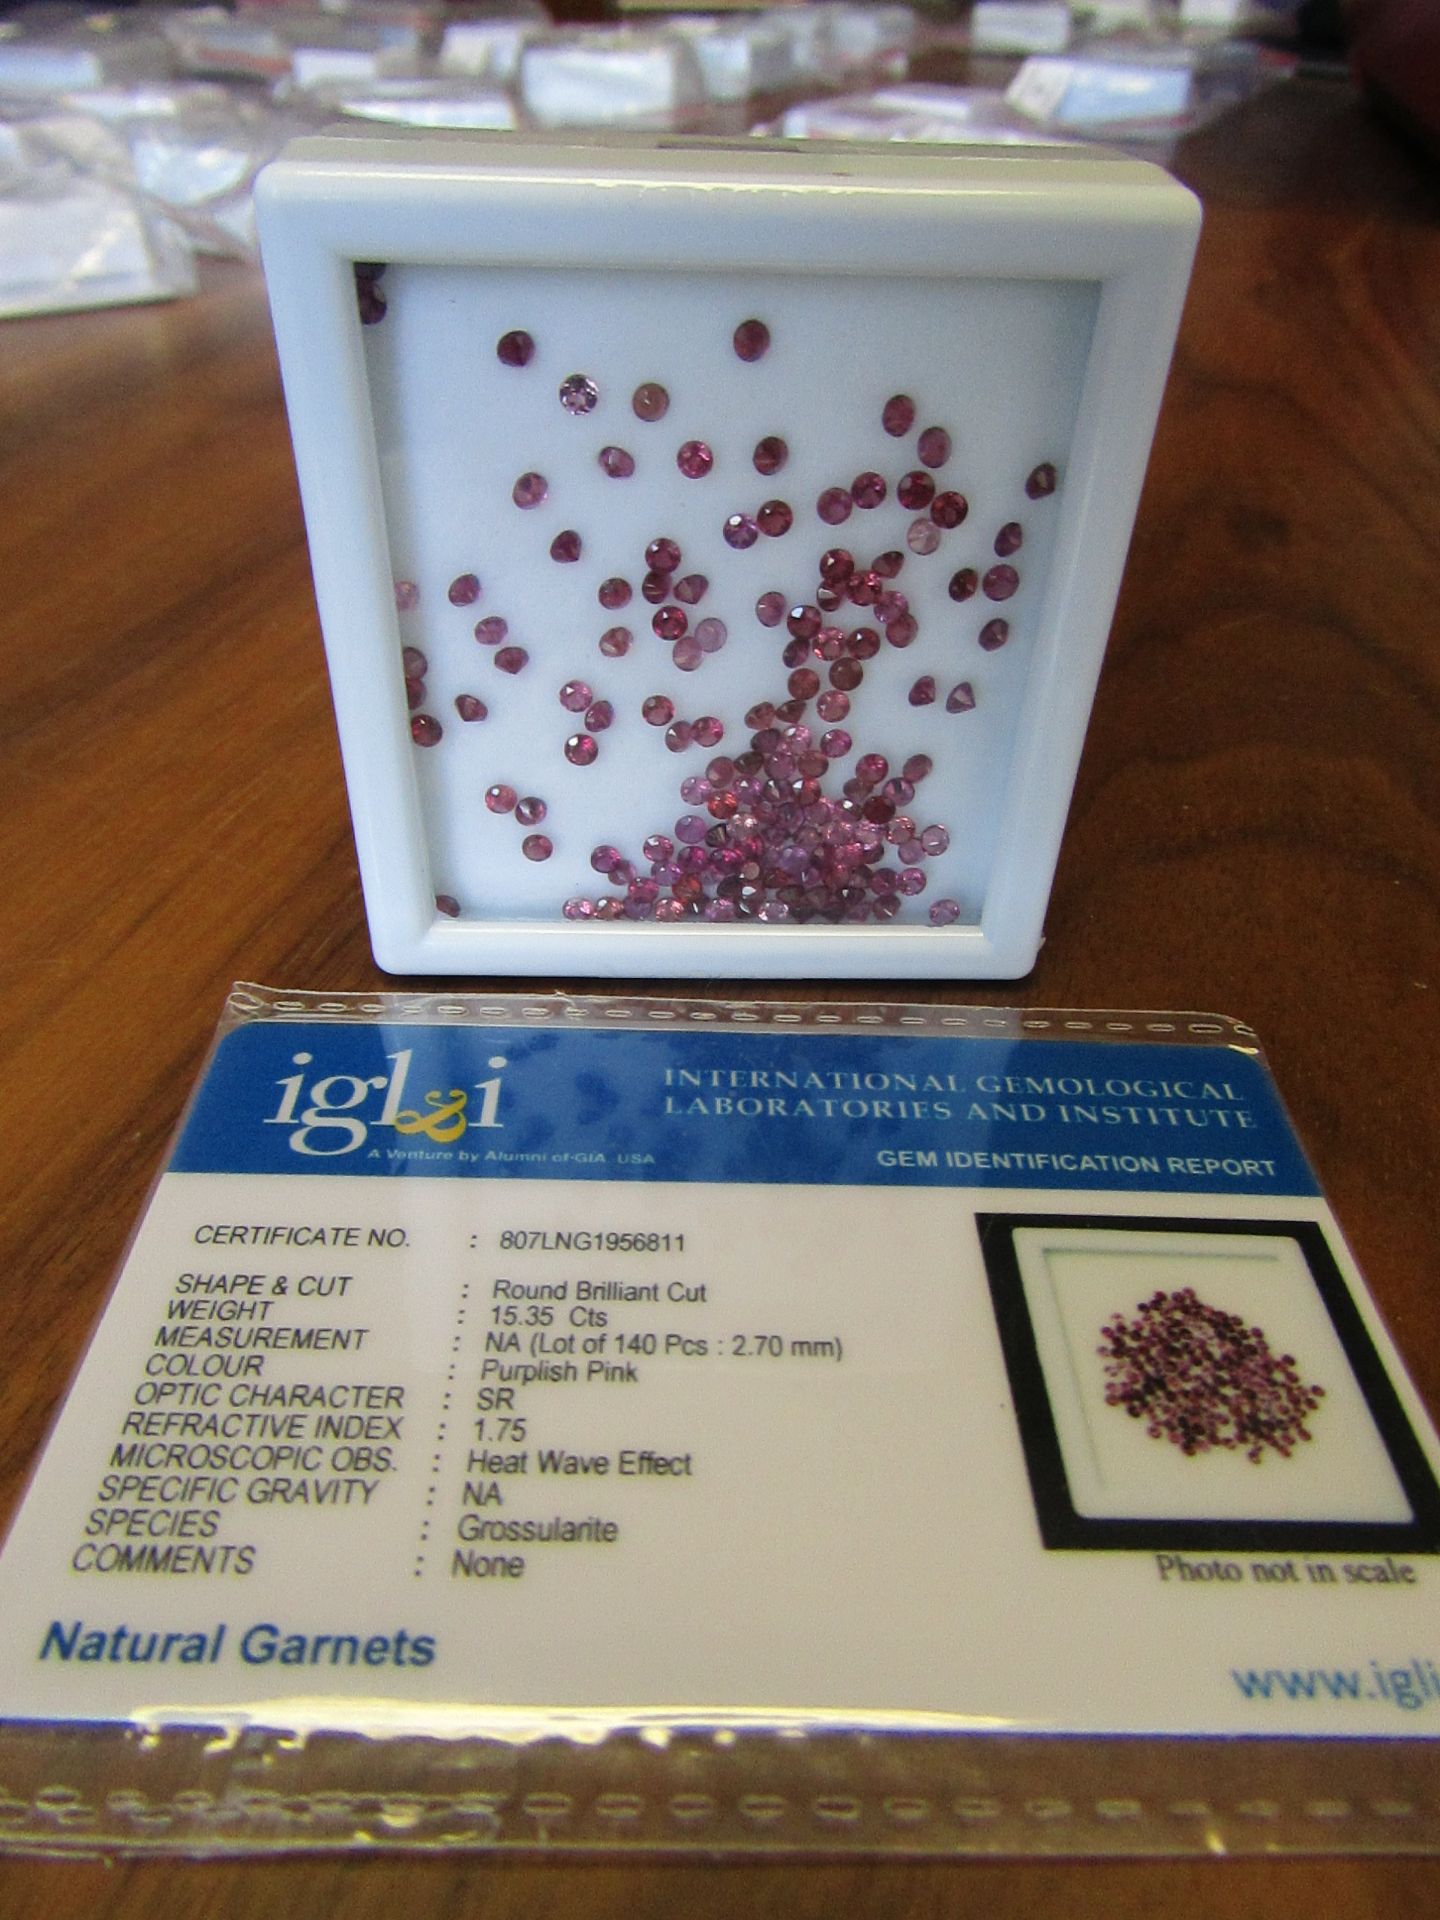 140 pieces Purplish Pink Natural Garnets Round Brilliant Cut. Total Weight 15.35 Carats. As per